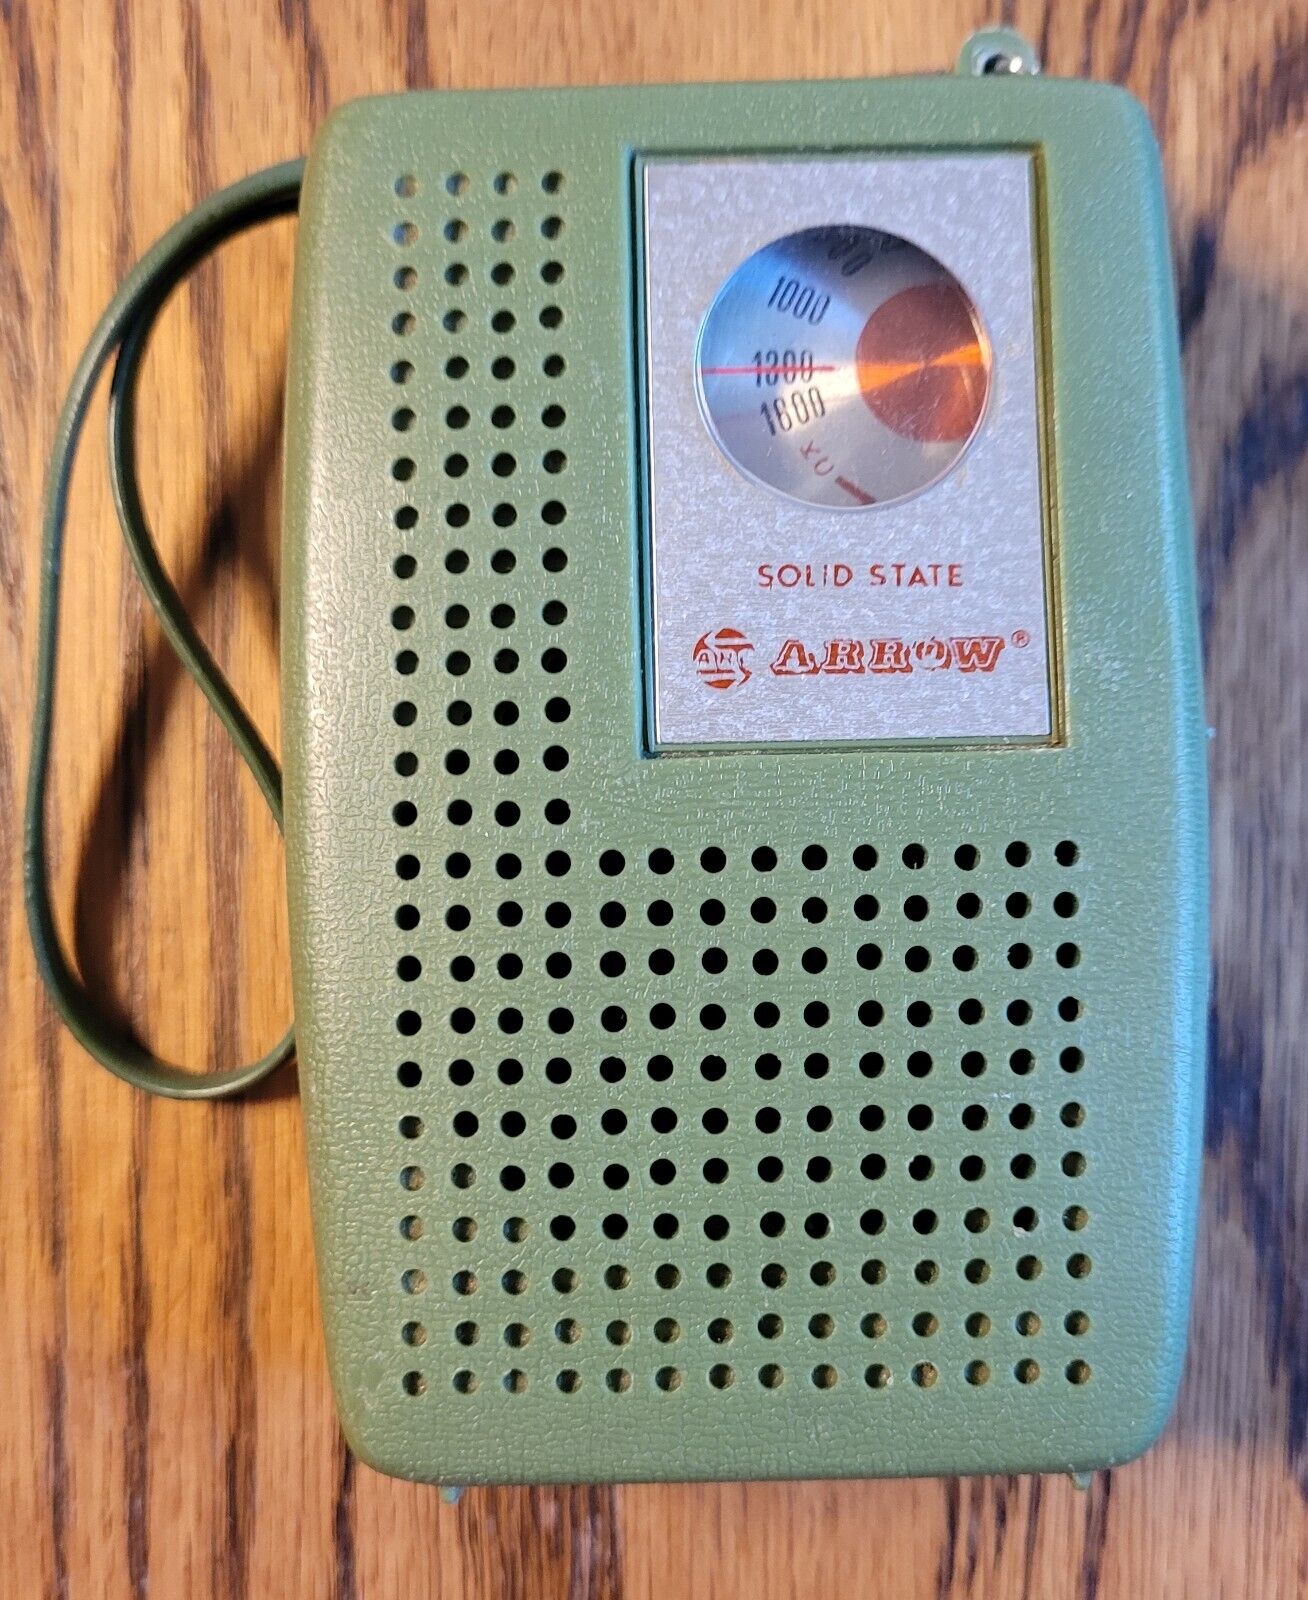 Vintage Radio AM Arrow Model 2601 Solid State Radio Green - Tested Works